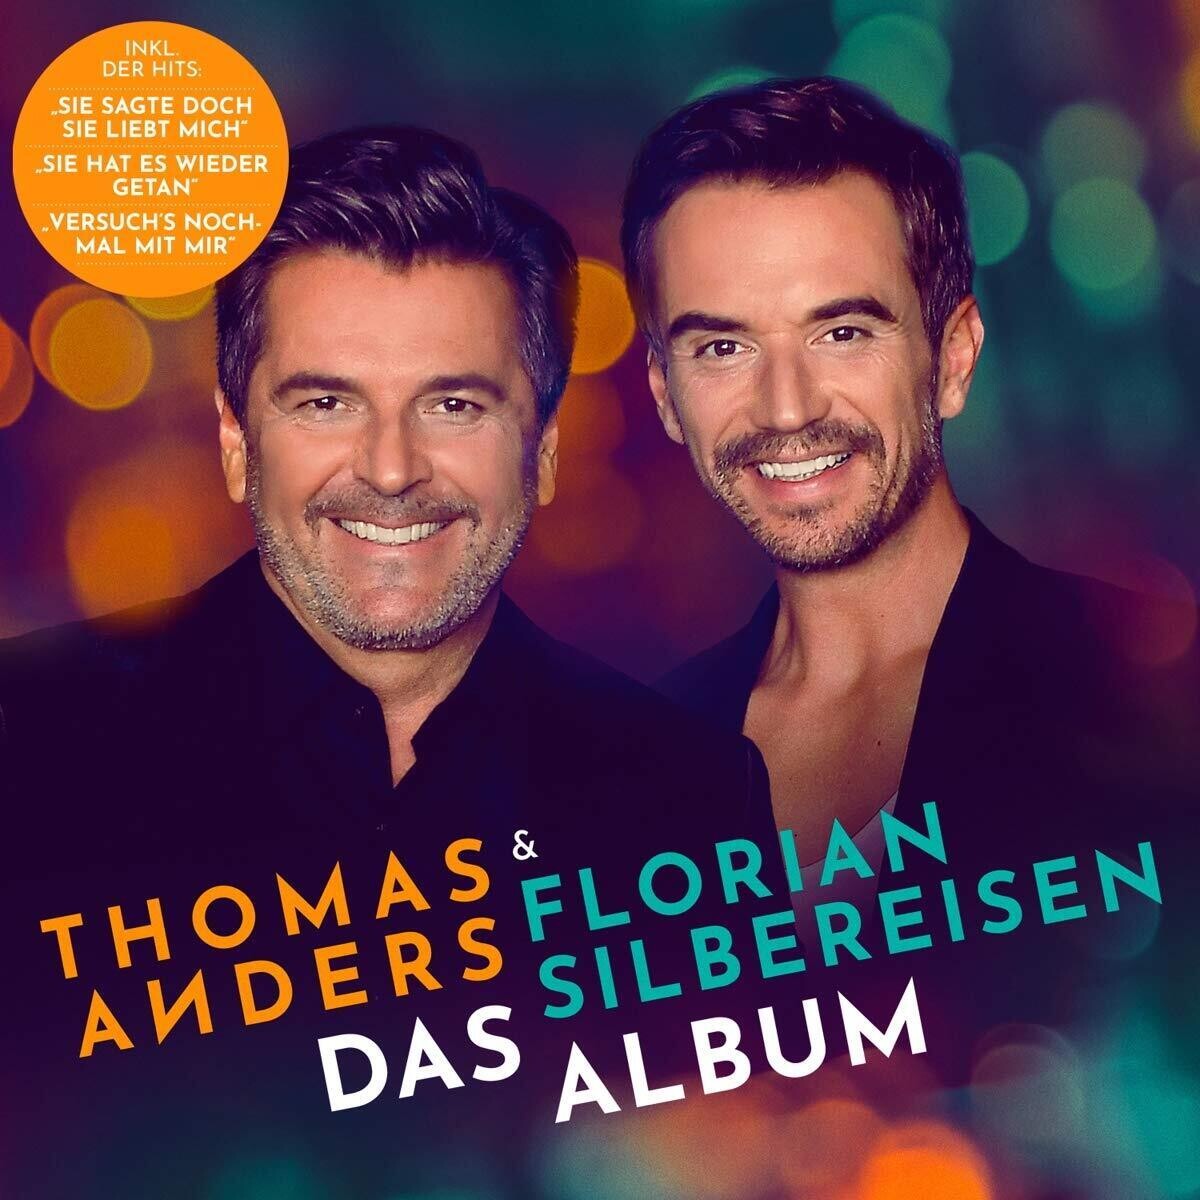 Thomas Anders & Florian Silbereisen - Das Album (2020) CD